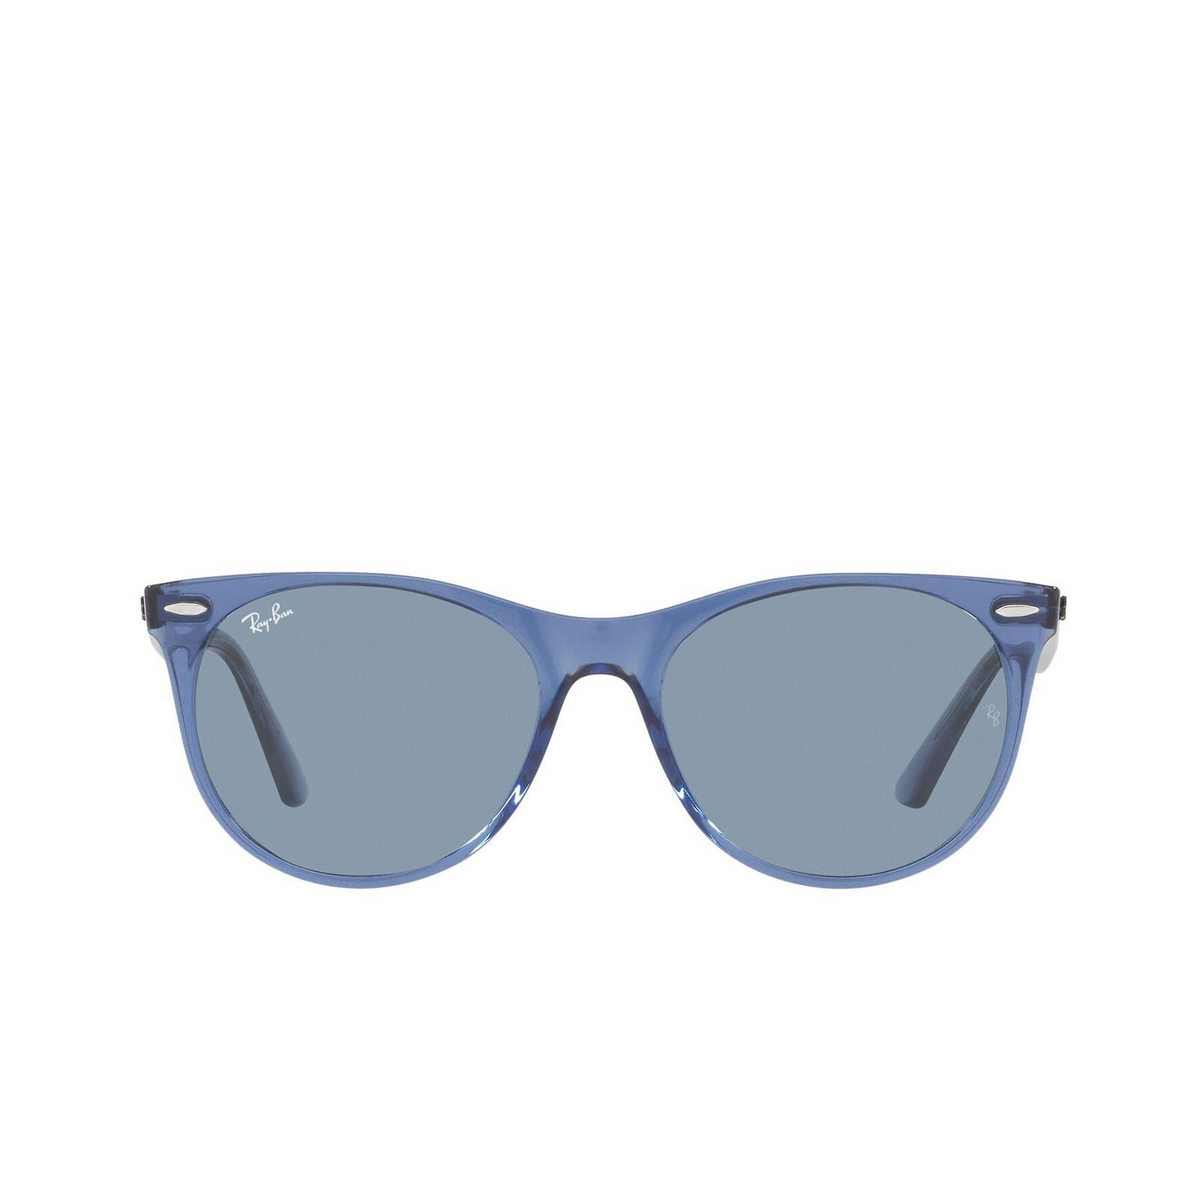 Ray-Ban WAYFARER II Sunglasses 658756 True Blue - front view